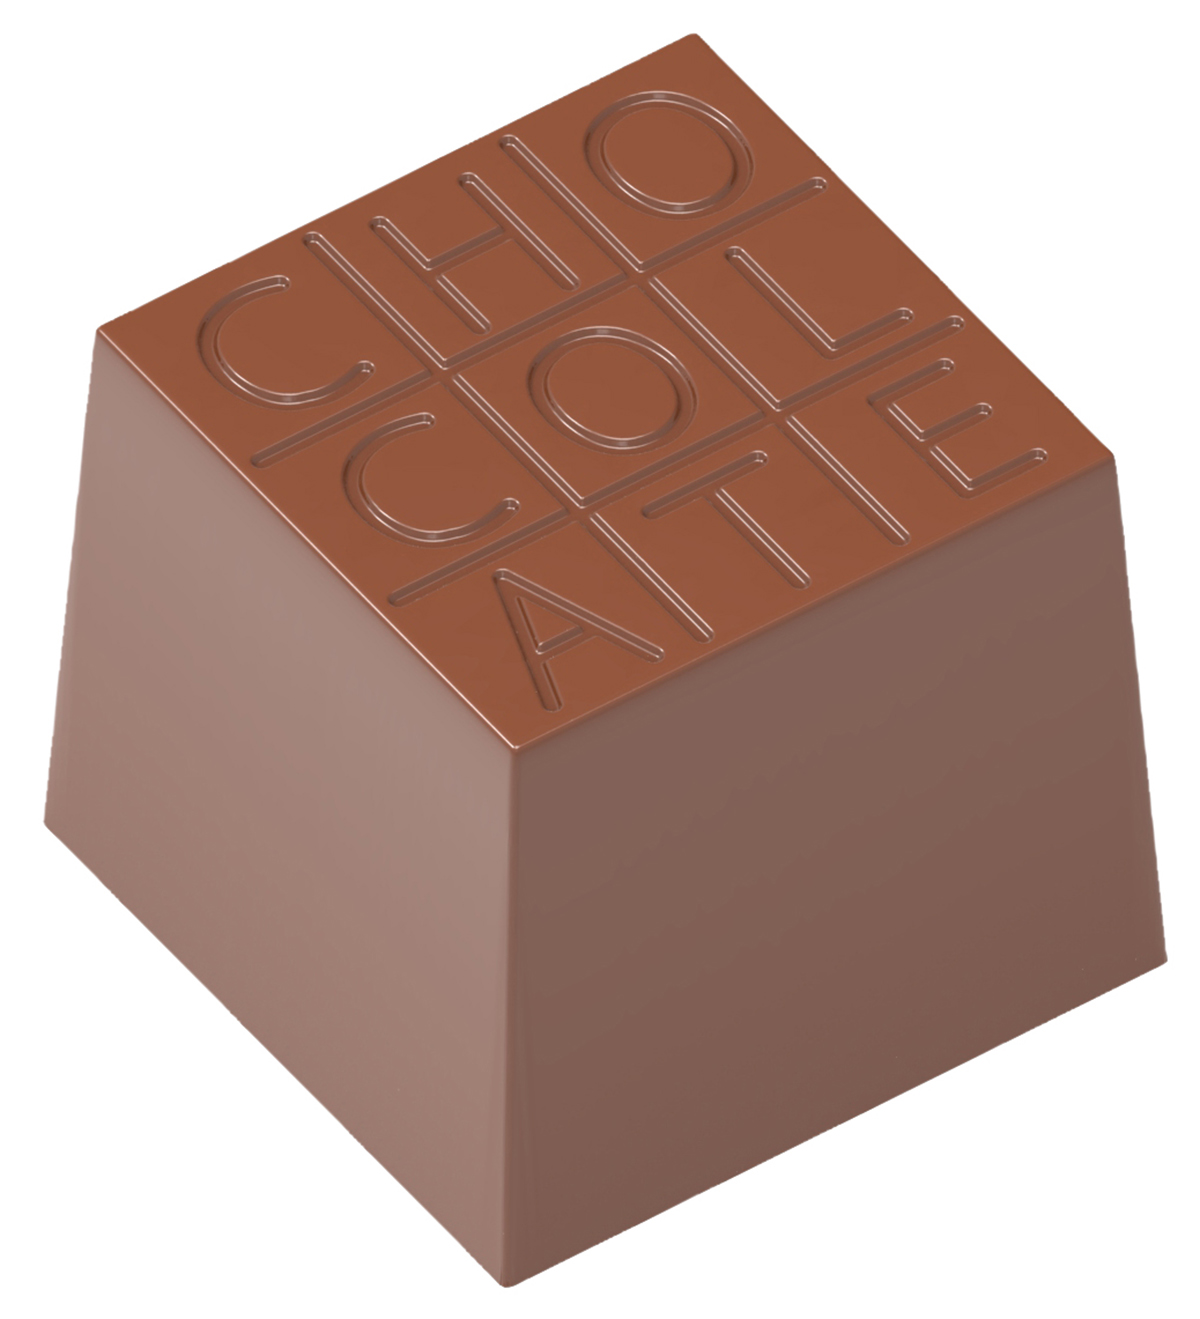 Professionel chokoladeform i polycarbonat - Cube "Chocolate" CW1729